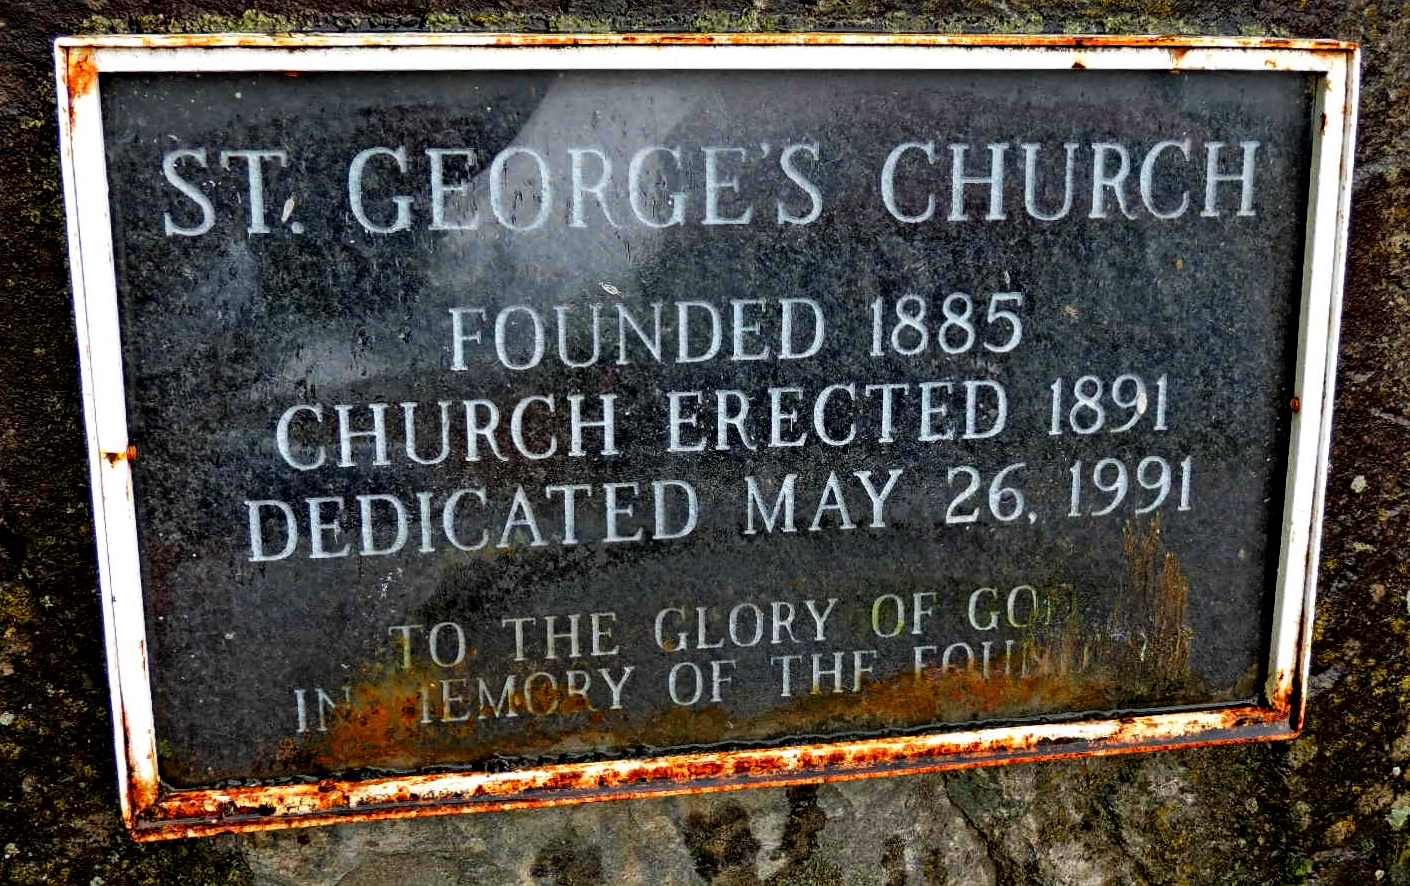 St George's